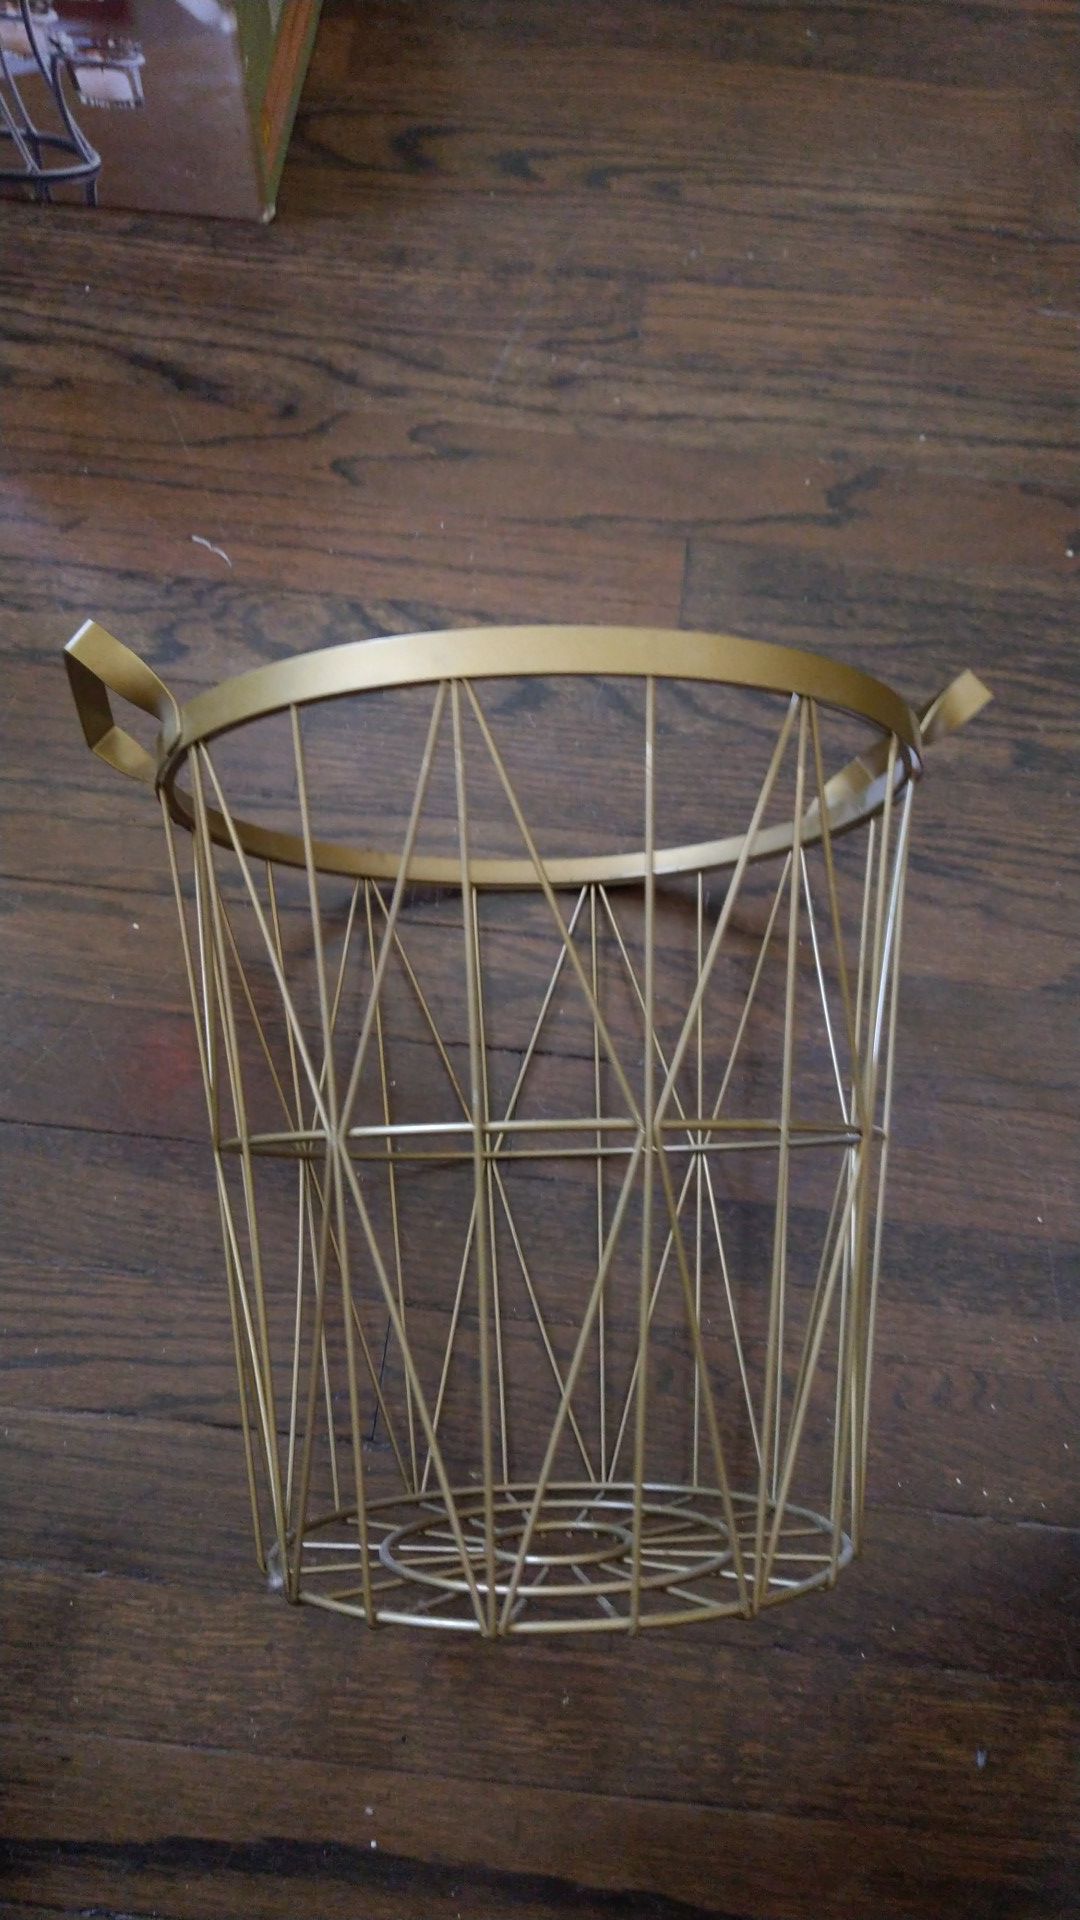 Metal decorative basket